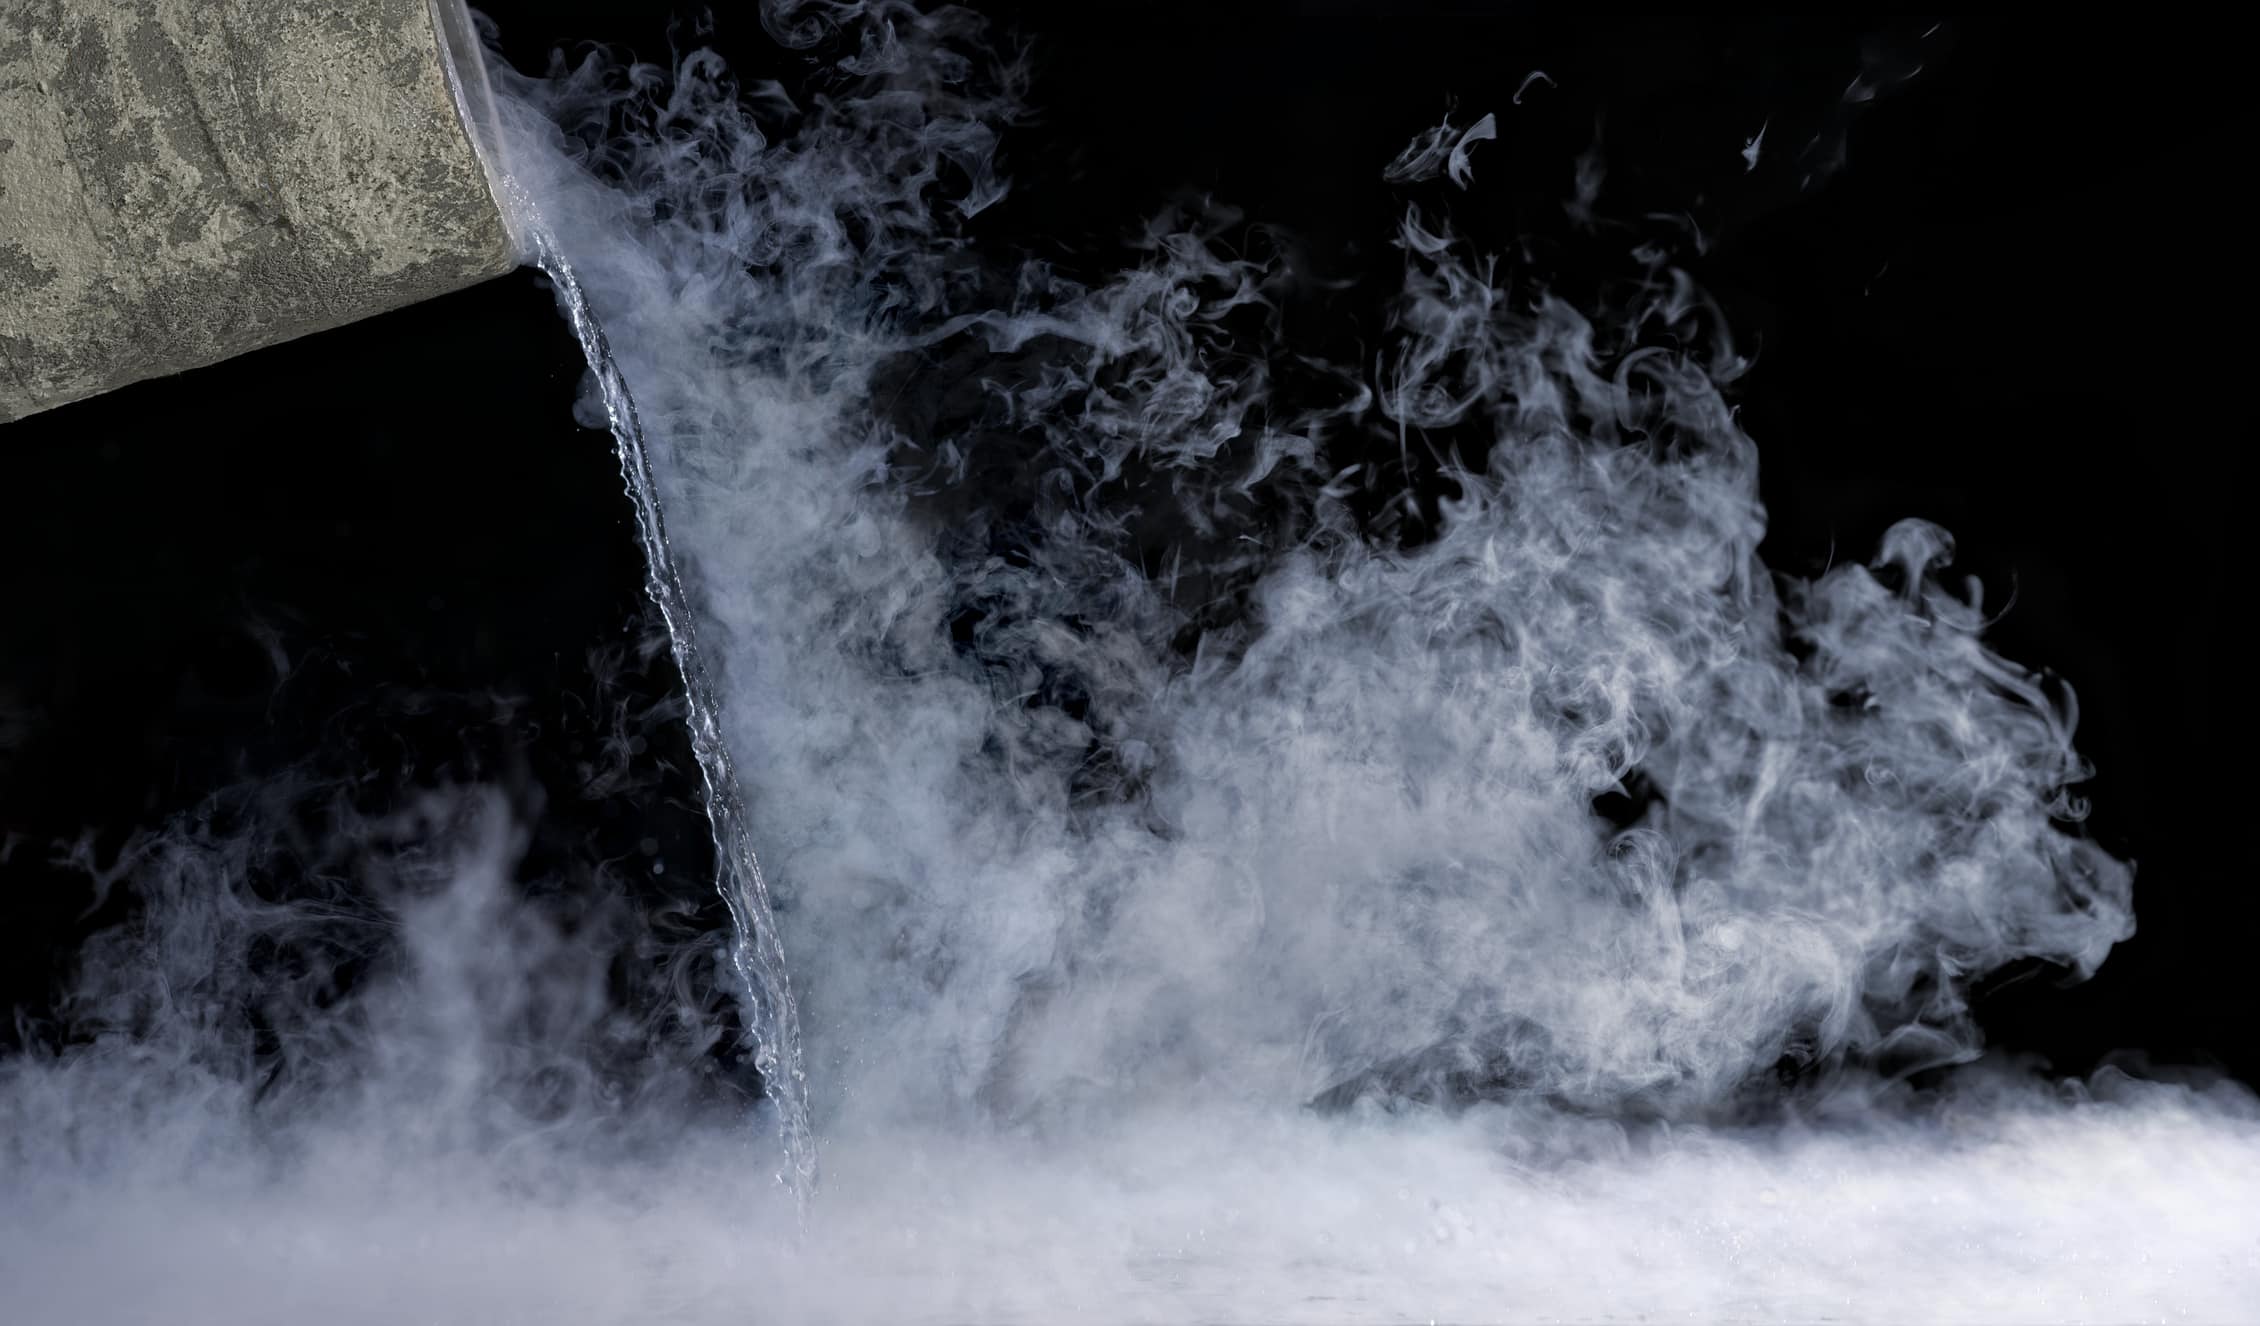 Liquid nitrogen turns to vapor very quickly at room temperature.